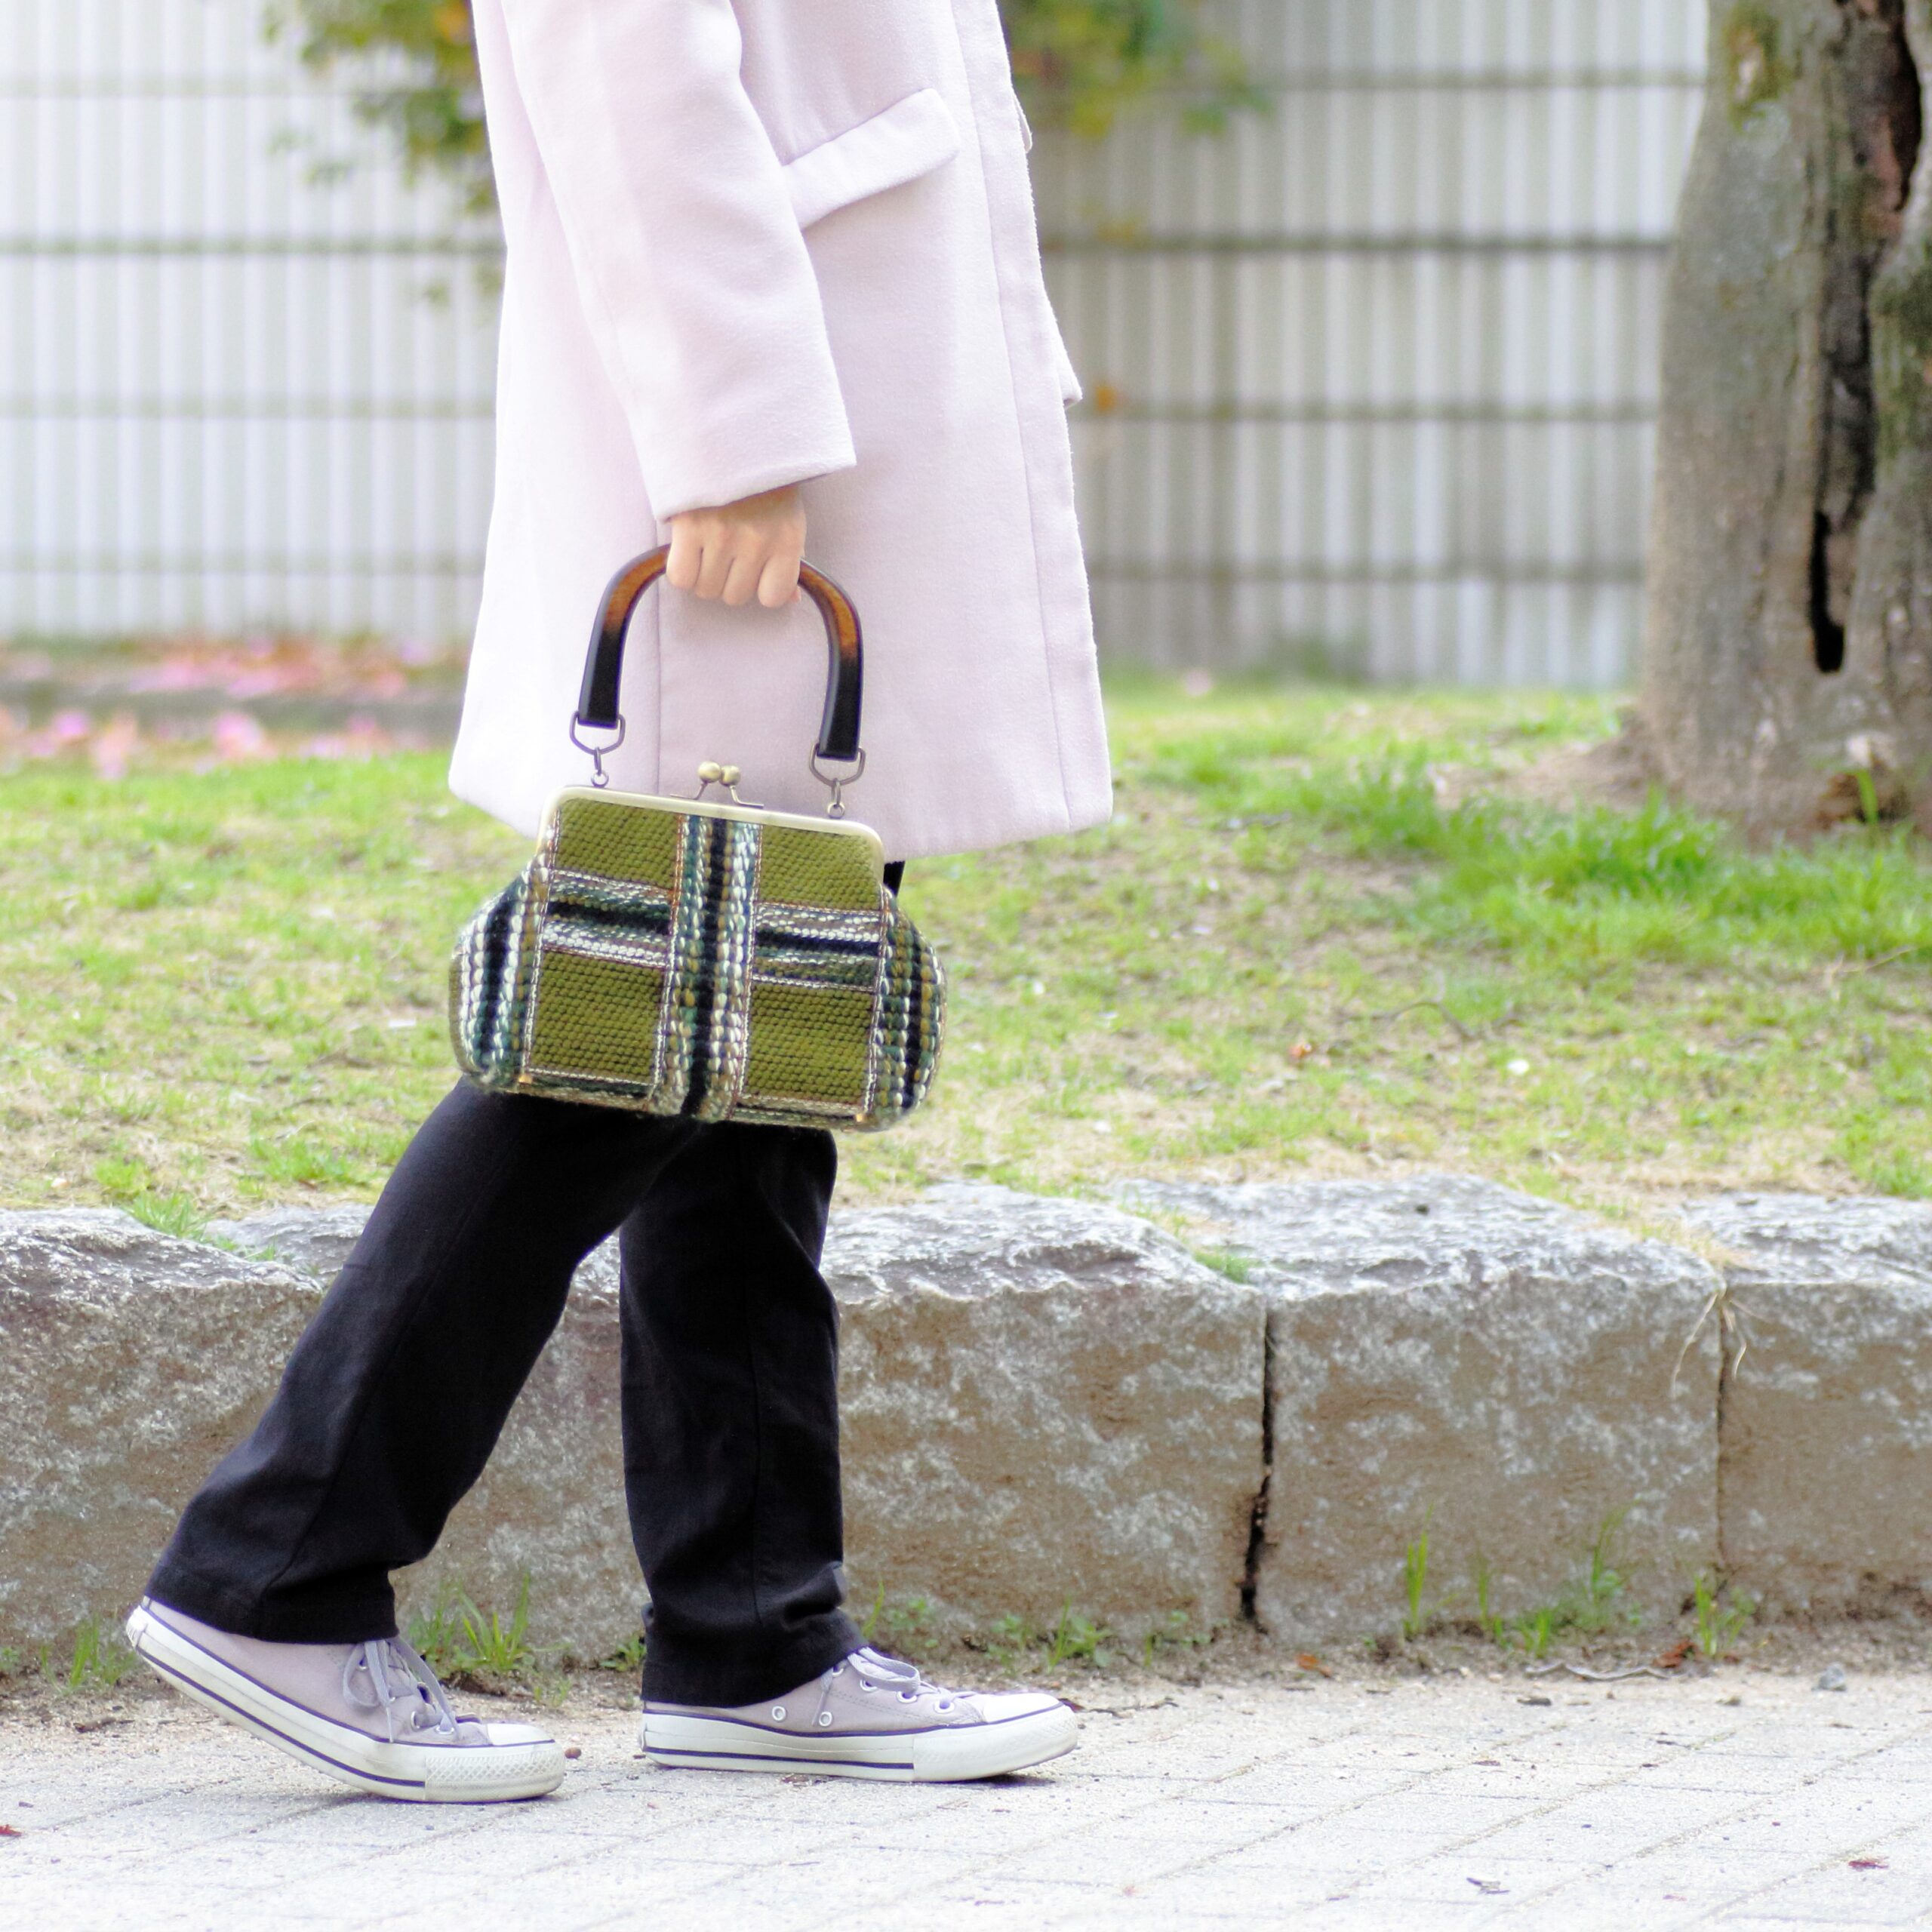 How to wear a green bag | HOWTOWEAR Fashion